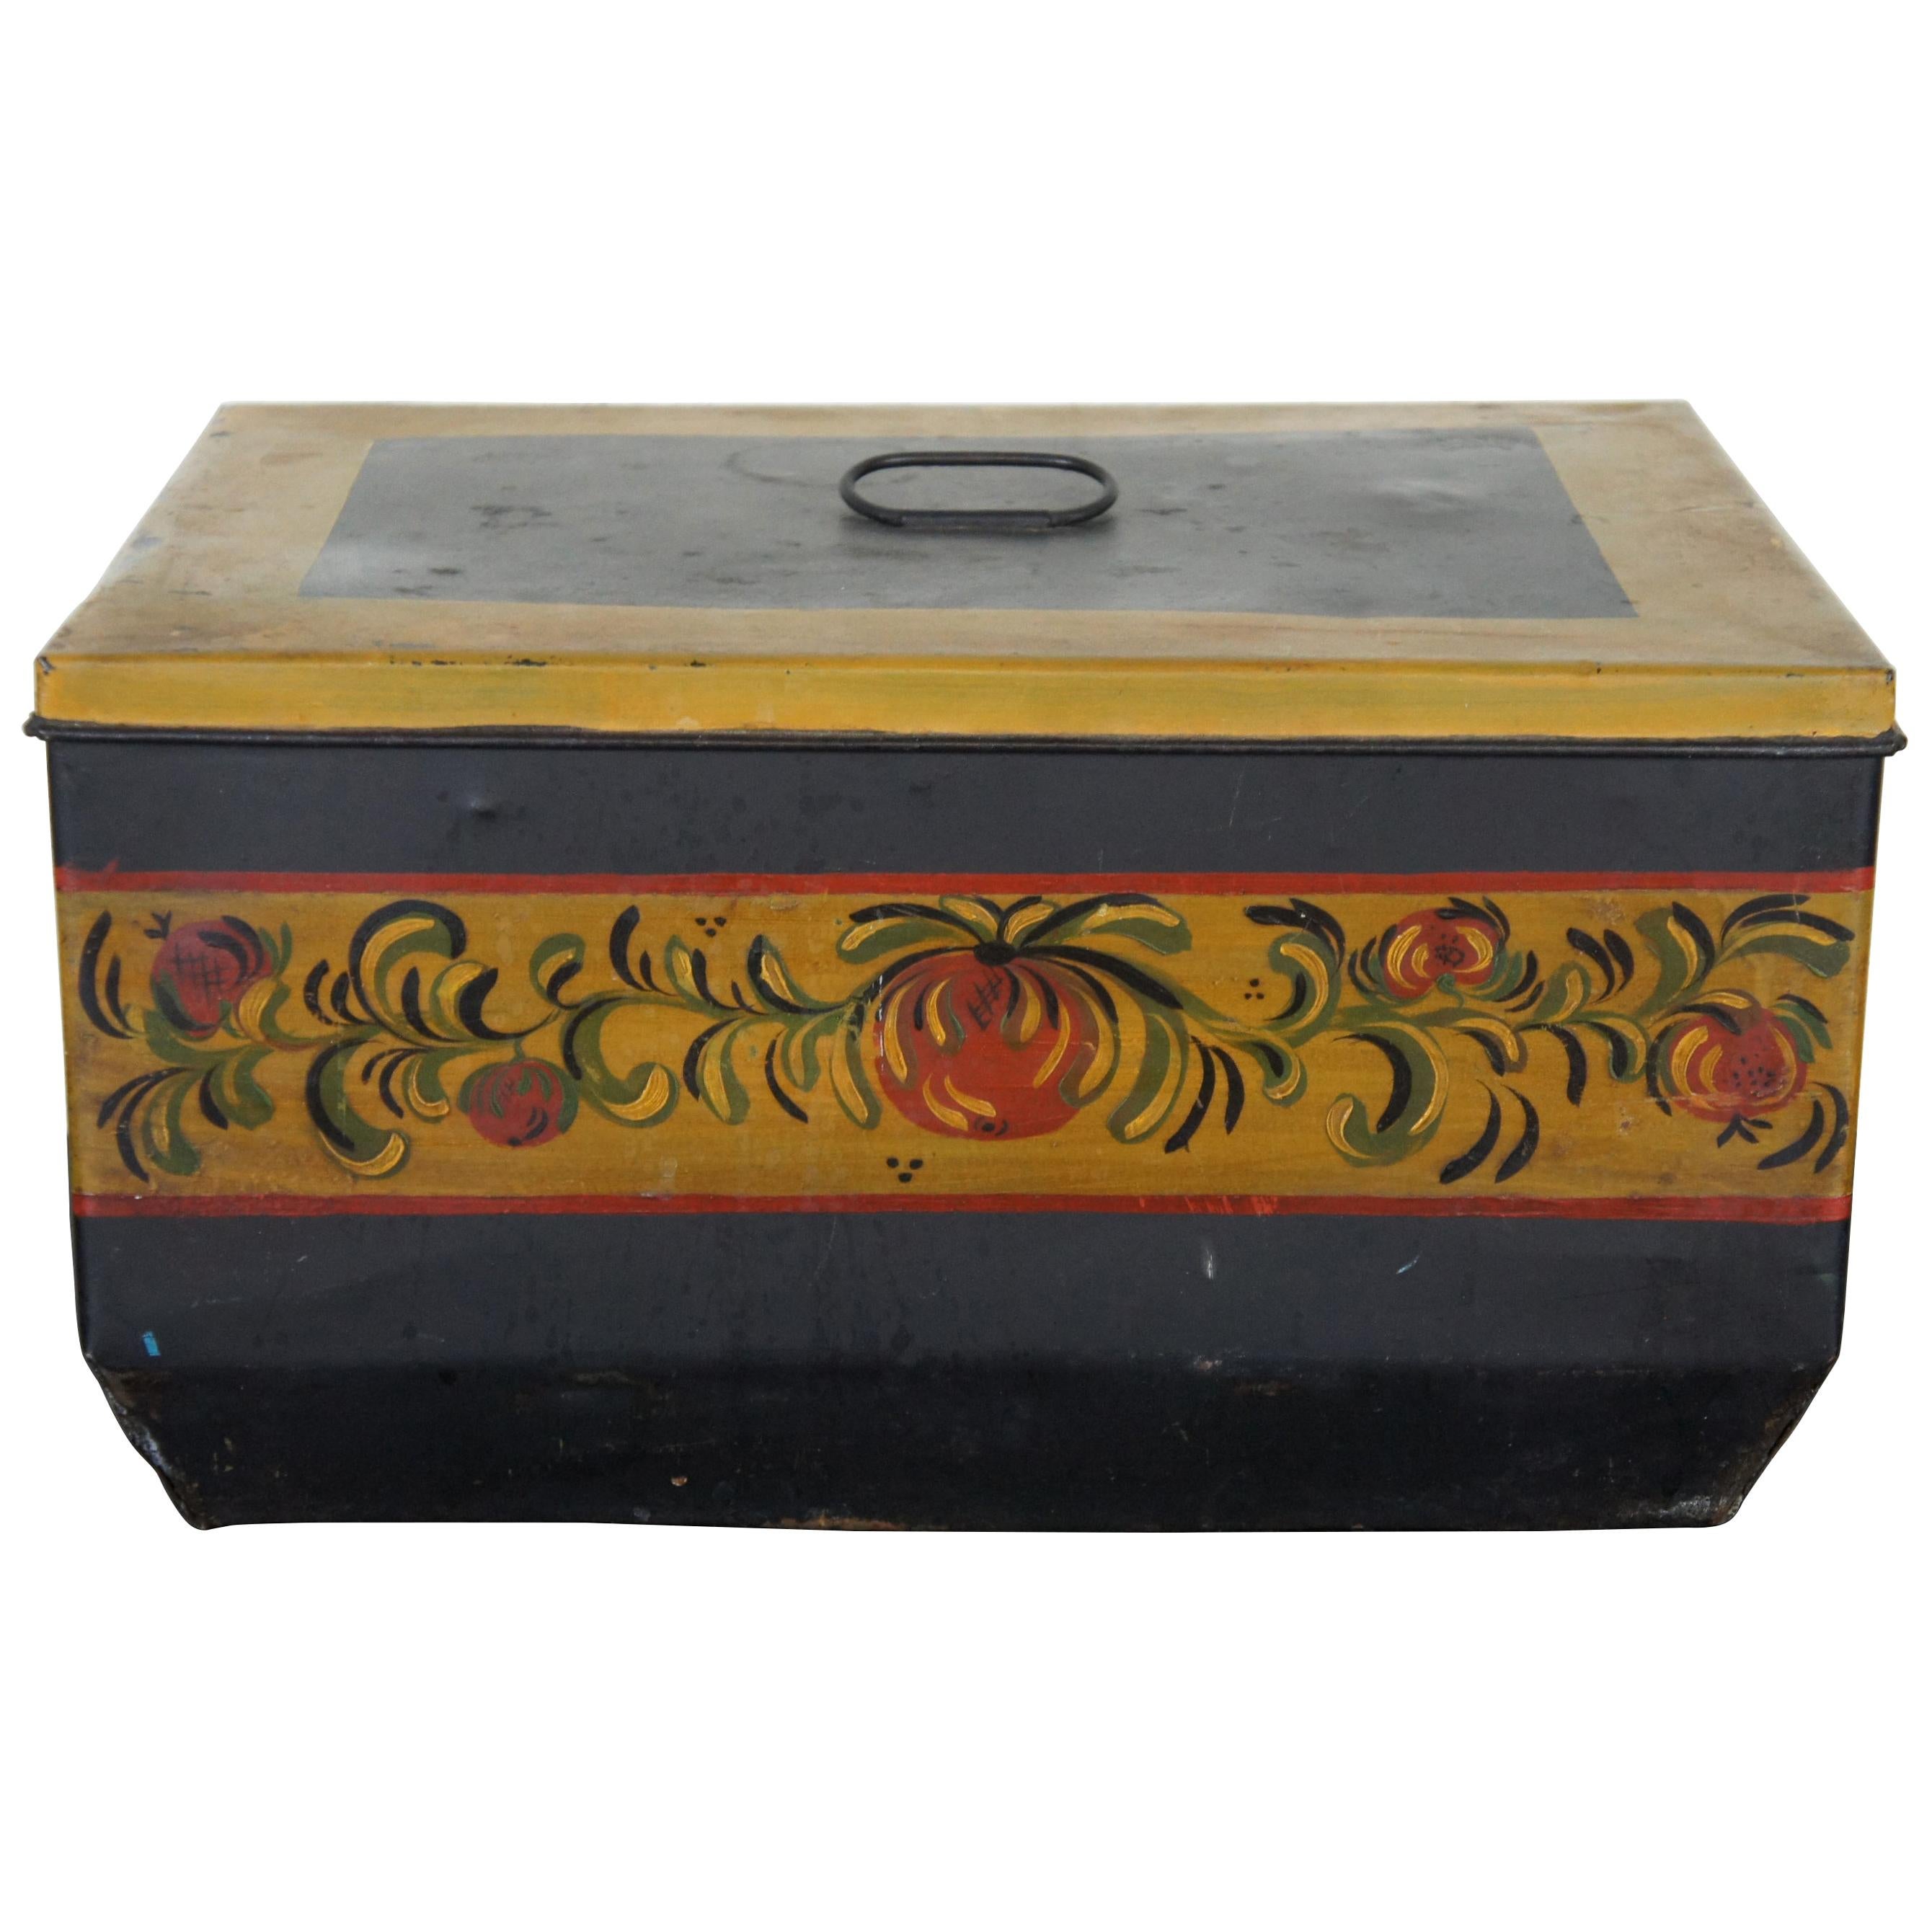 Antique Central Mfg Folk Art Toleware Bread Box Tin Pie Safe Cake Bake Farmhouse